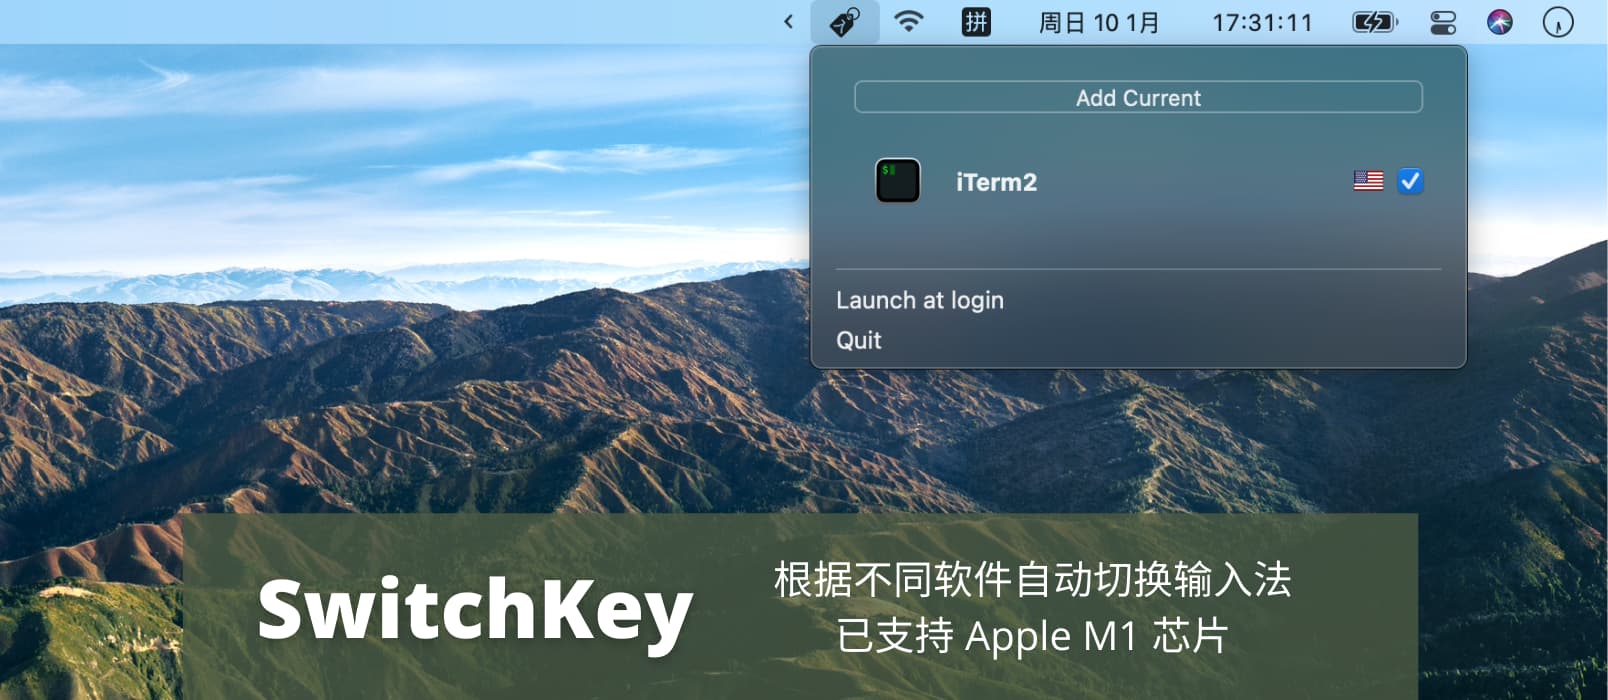 SwitchKey - 根据不同软件自动切换输入法，已支持 Apple M1 芯片[macOS]